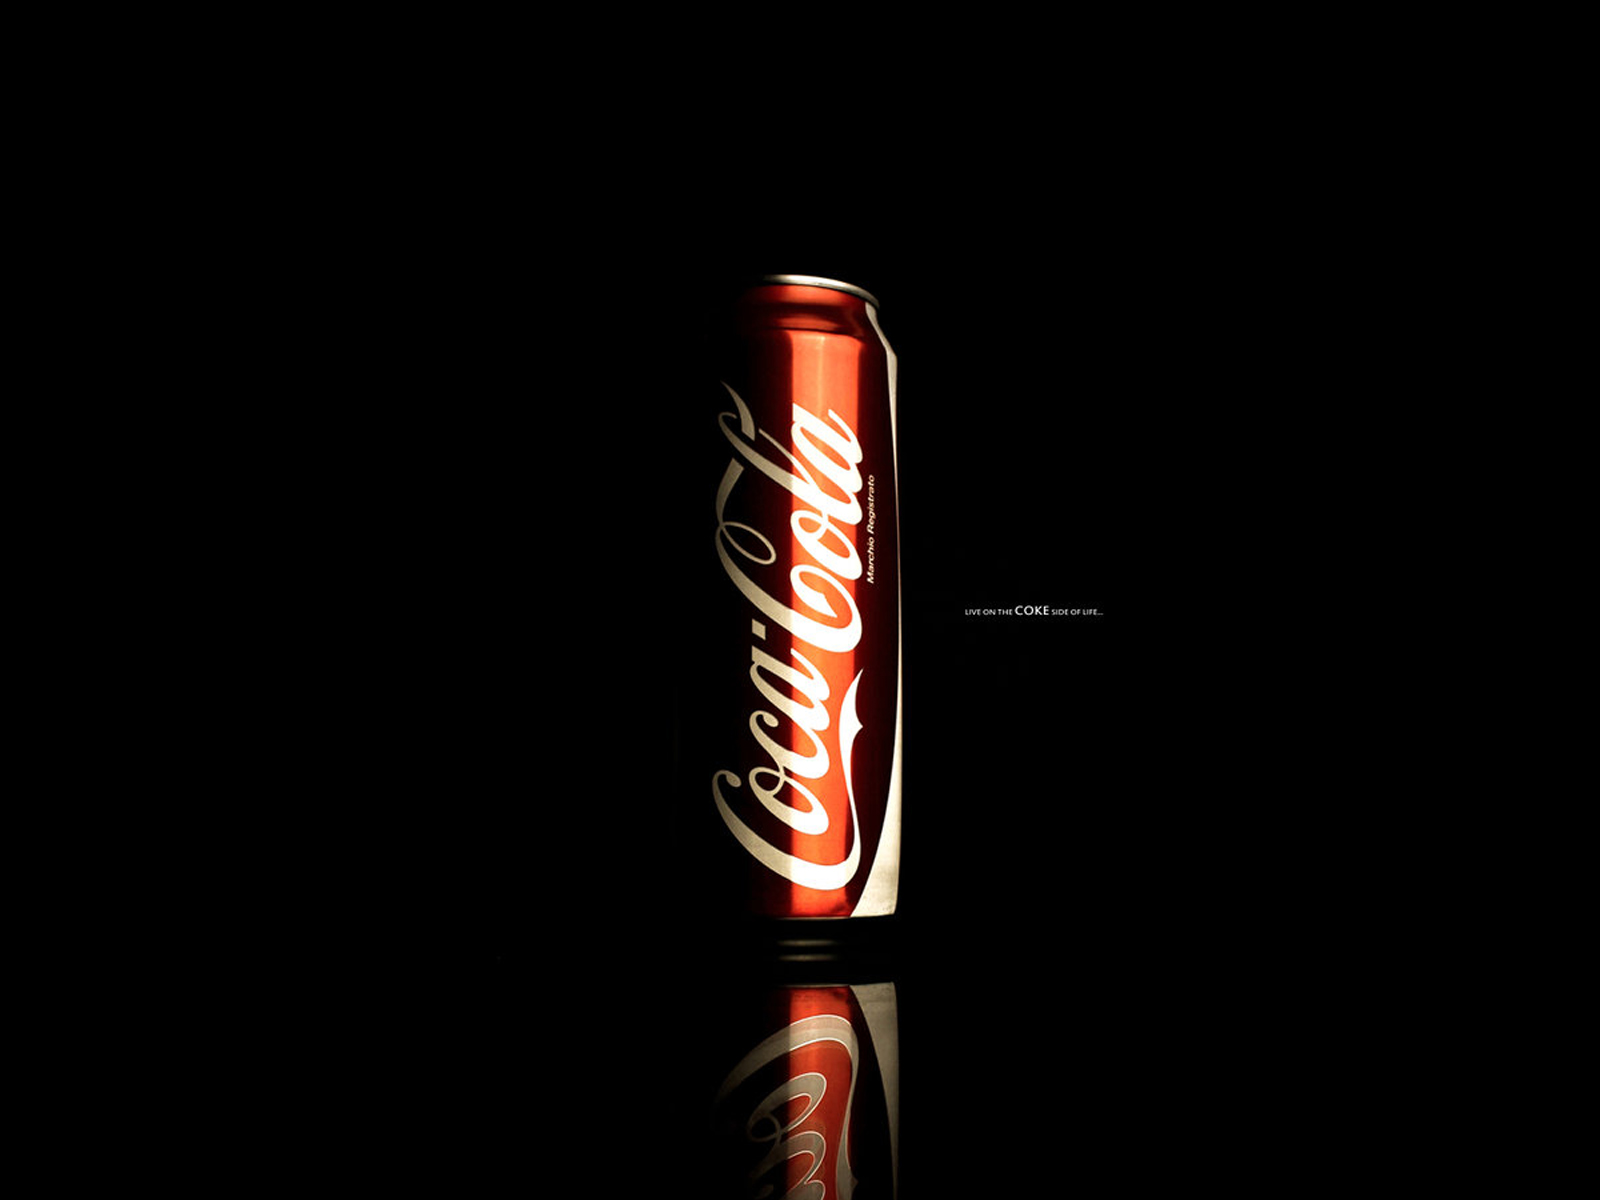 Image Wallpaper De Coca Cola Pc Android iPhone And iPad